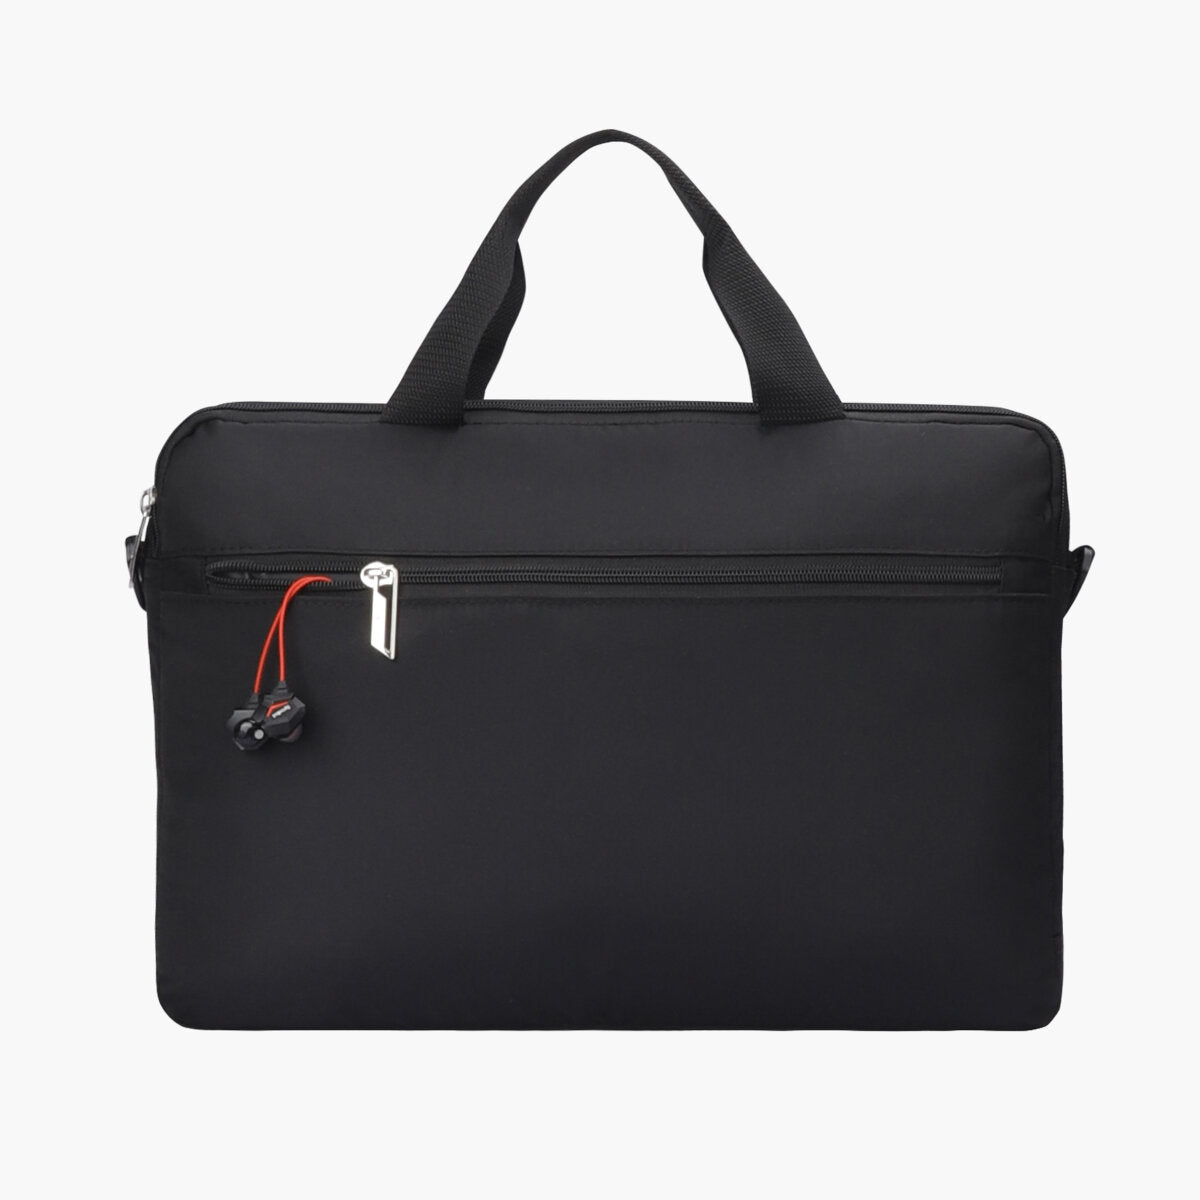 Black | Protecta Organised Chaos 2.0 Office Laptop Bag - 6